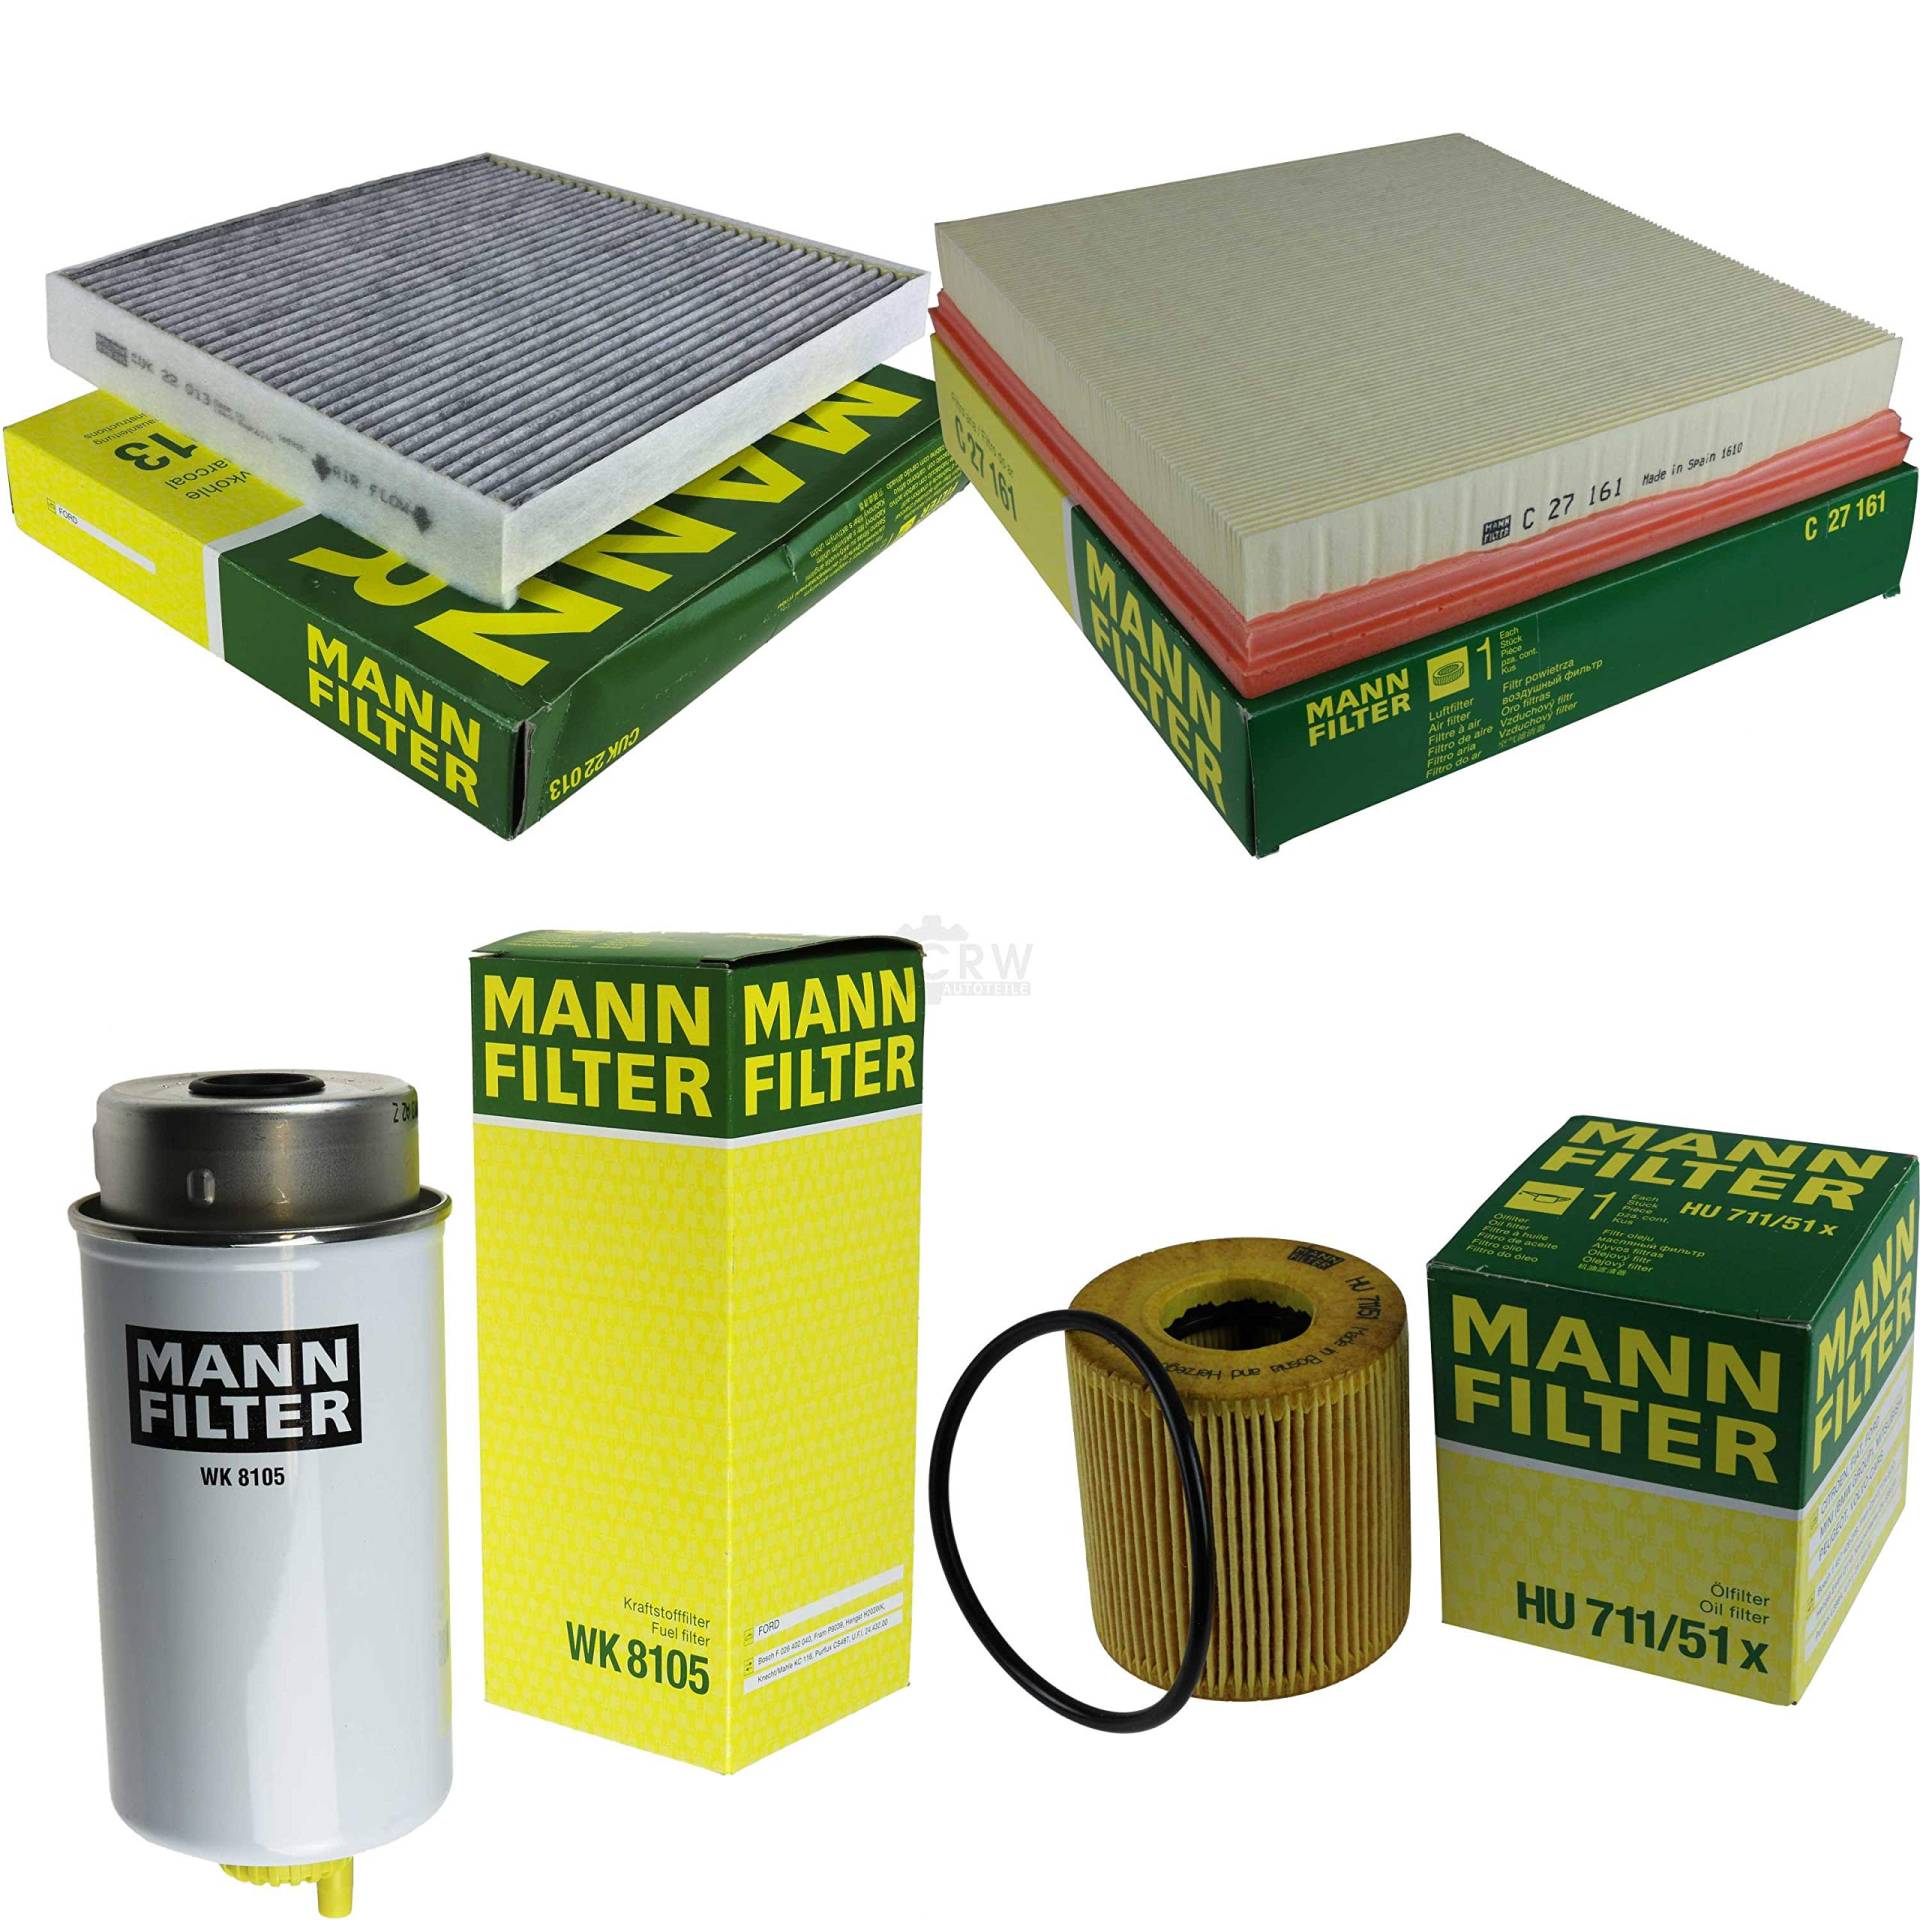 MANN-FILTER Inspektions Set Inspektionspaket Luftfilter Ölfilter Innenraumfilter Kraftstofffilter von Diederichs